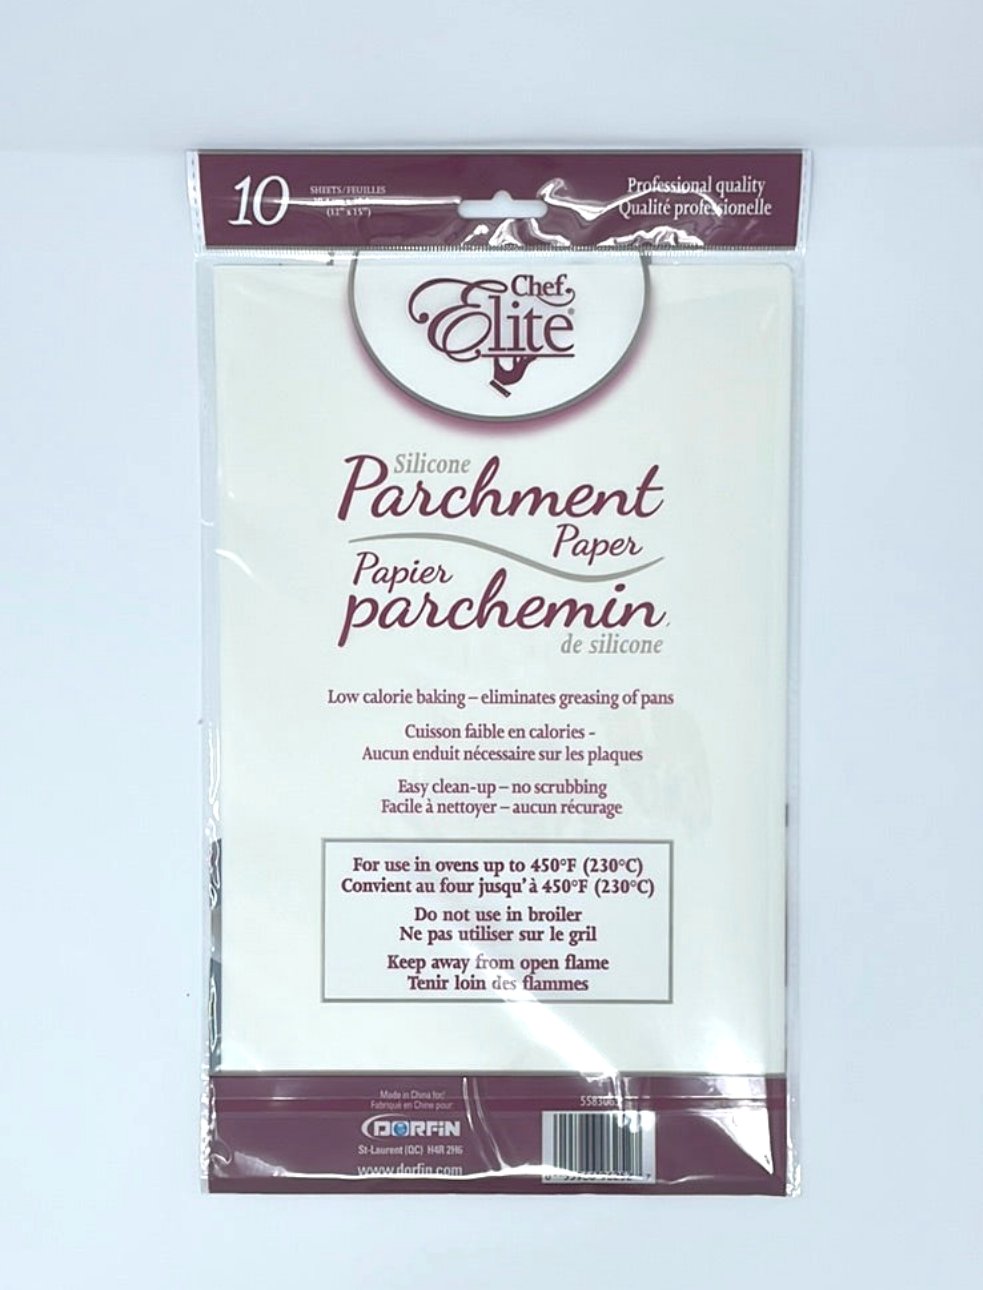 Parchment Paper (Silicone, 12" x 15", 10 units/pack)